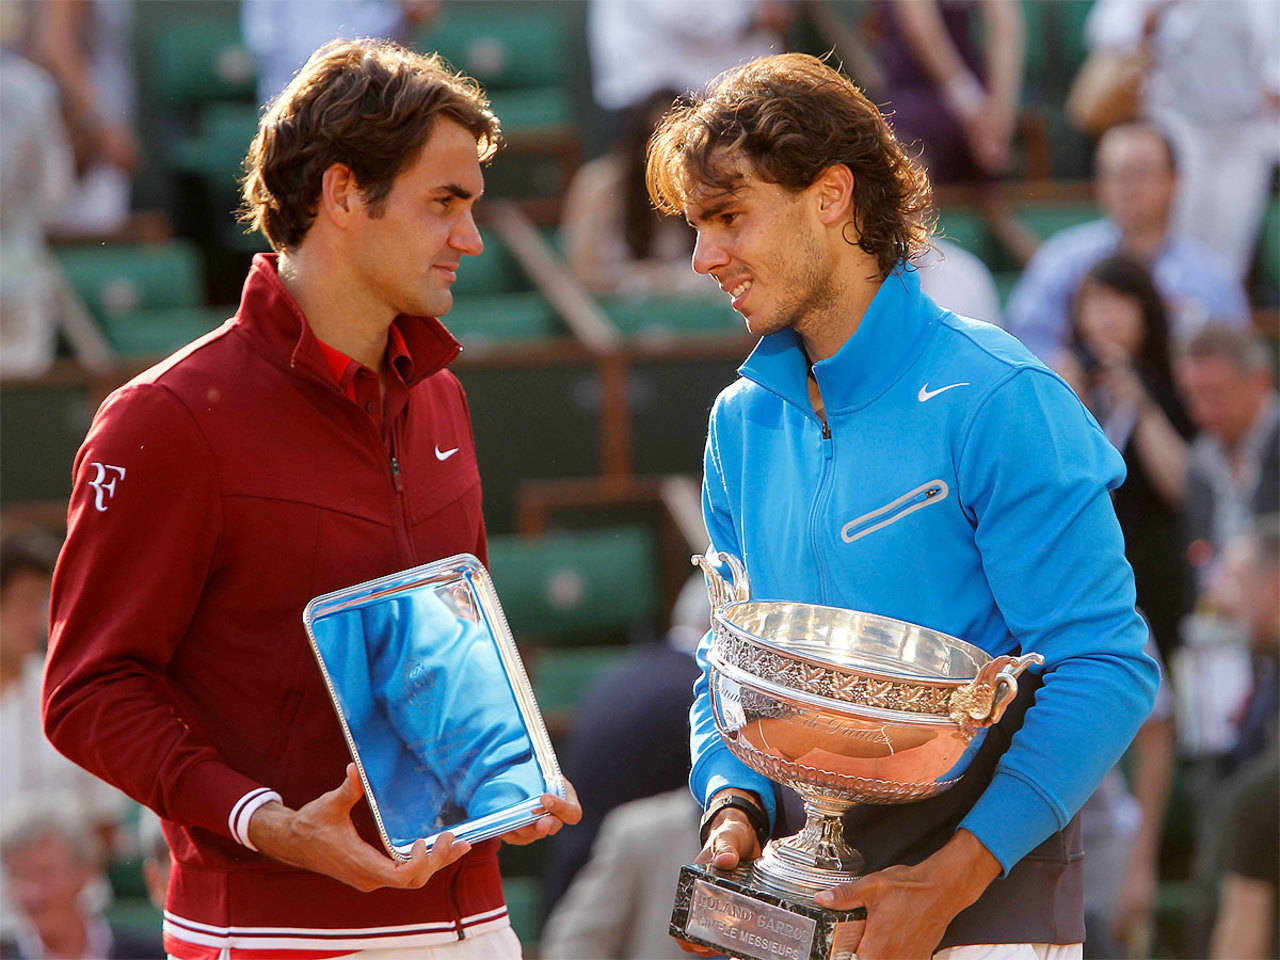 Another taste of Rafael Nadal-Roger Federer rivalry Tennis News